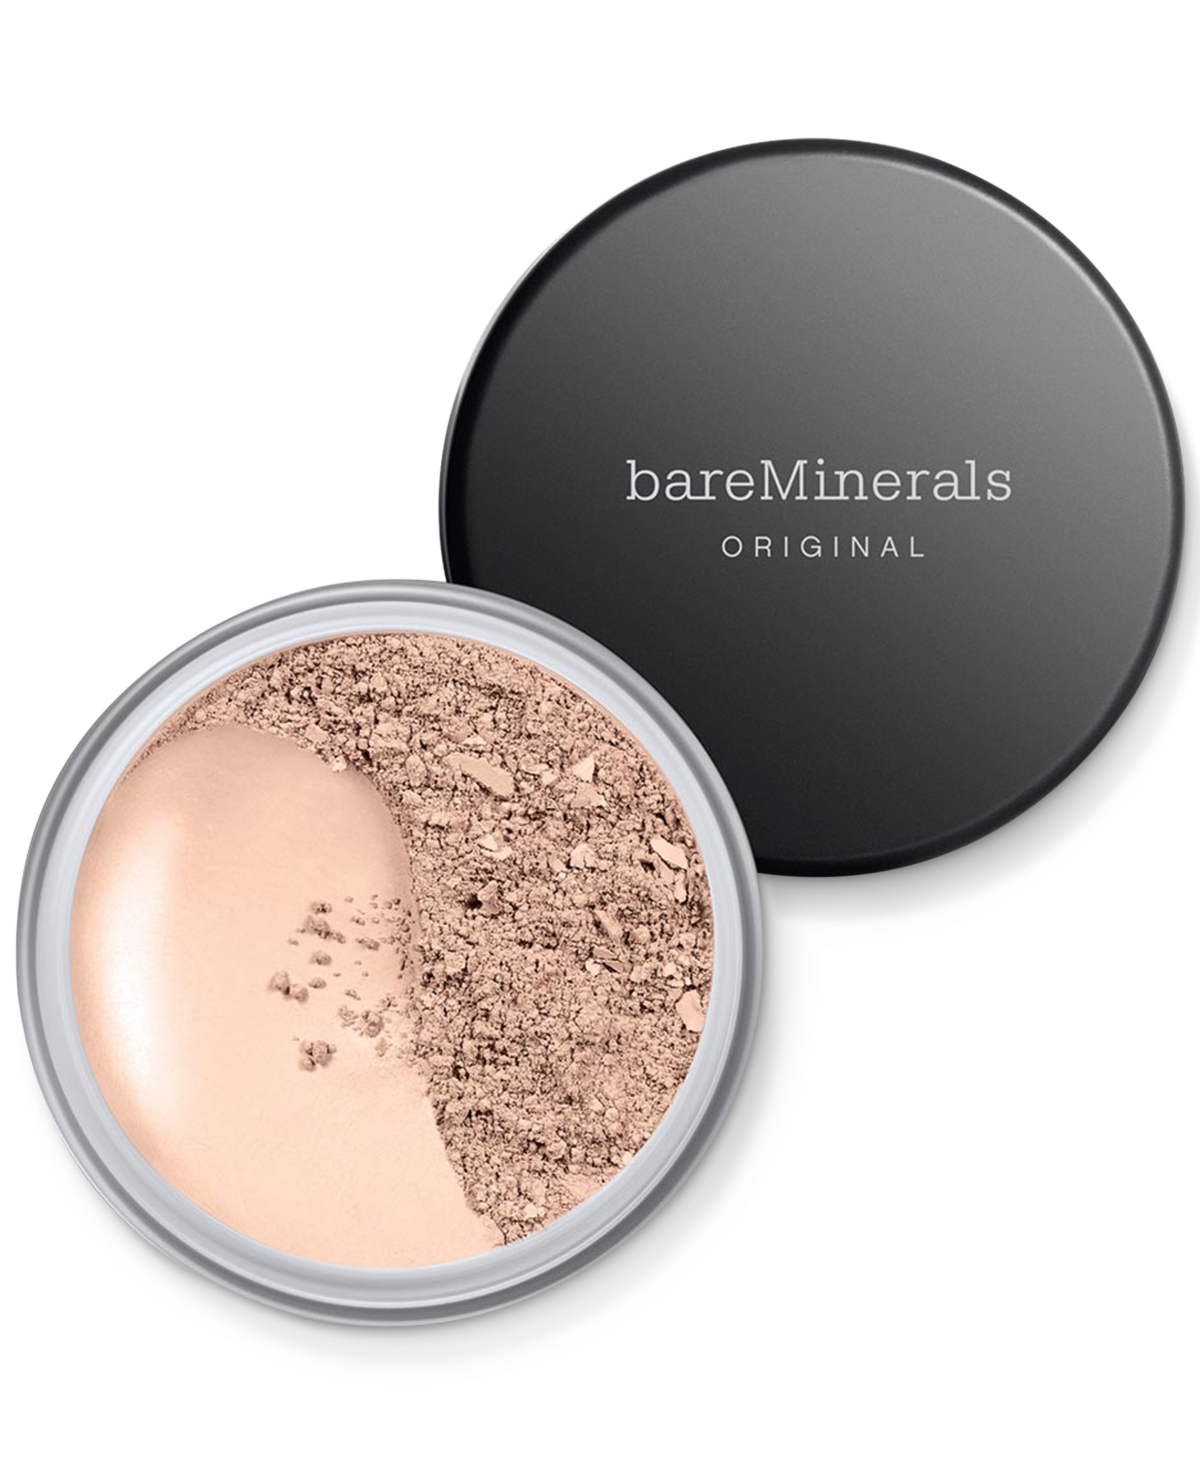 Bareminerals Original Loose Powder Foundation Spf 15 In Fairly Medium  - For Fair To Light Skin